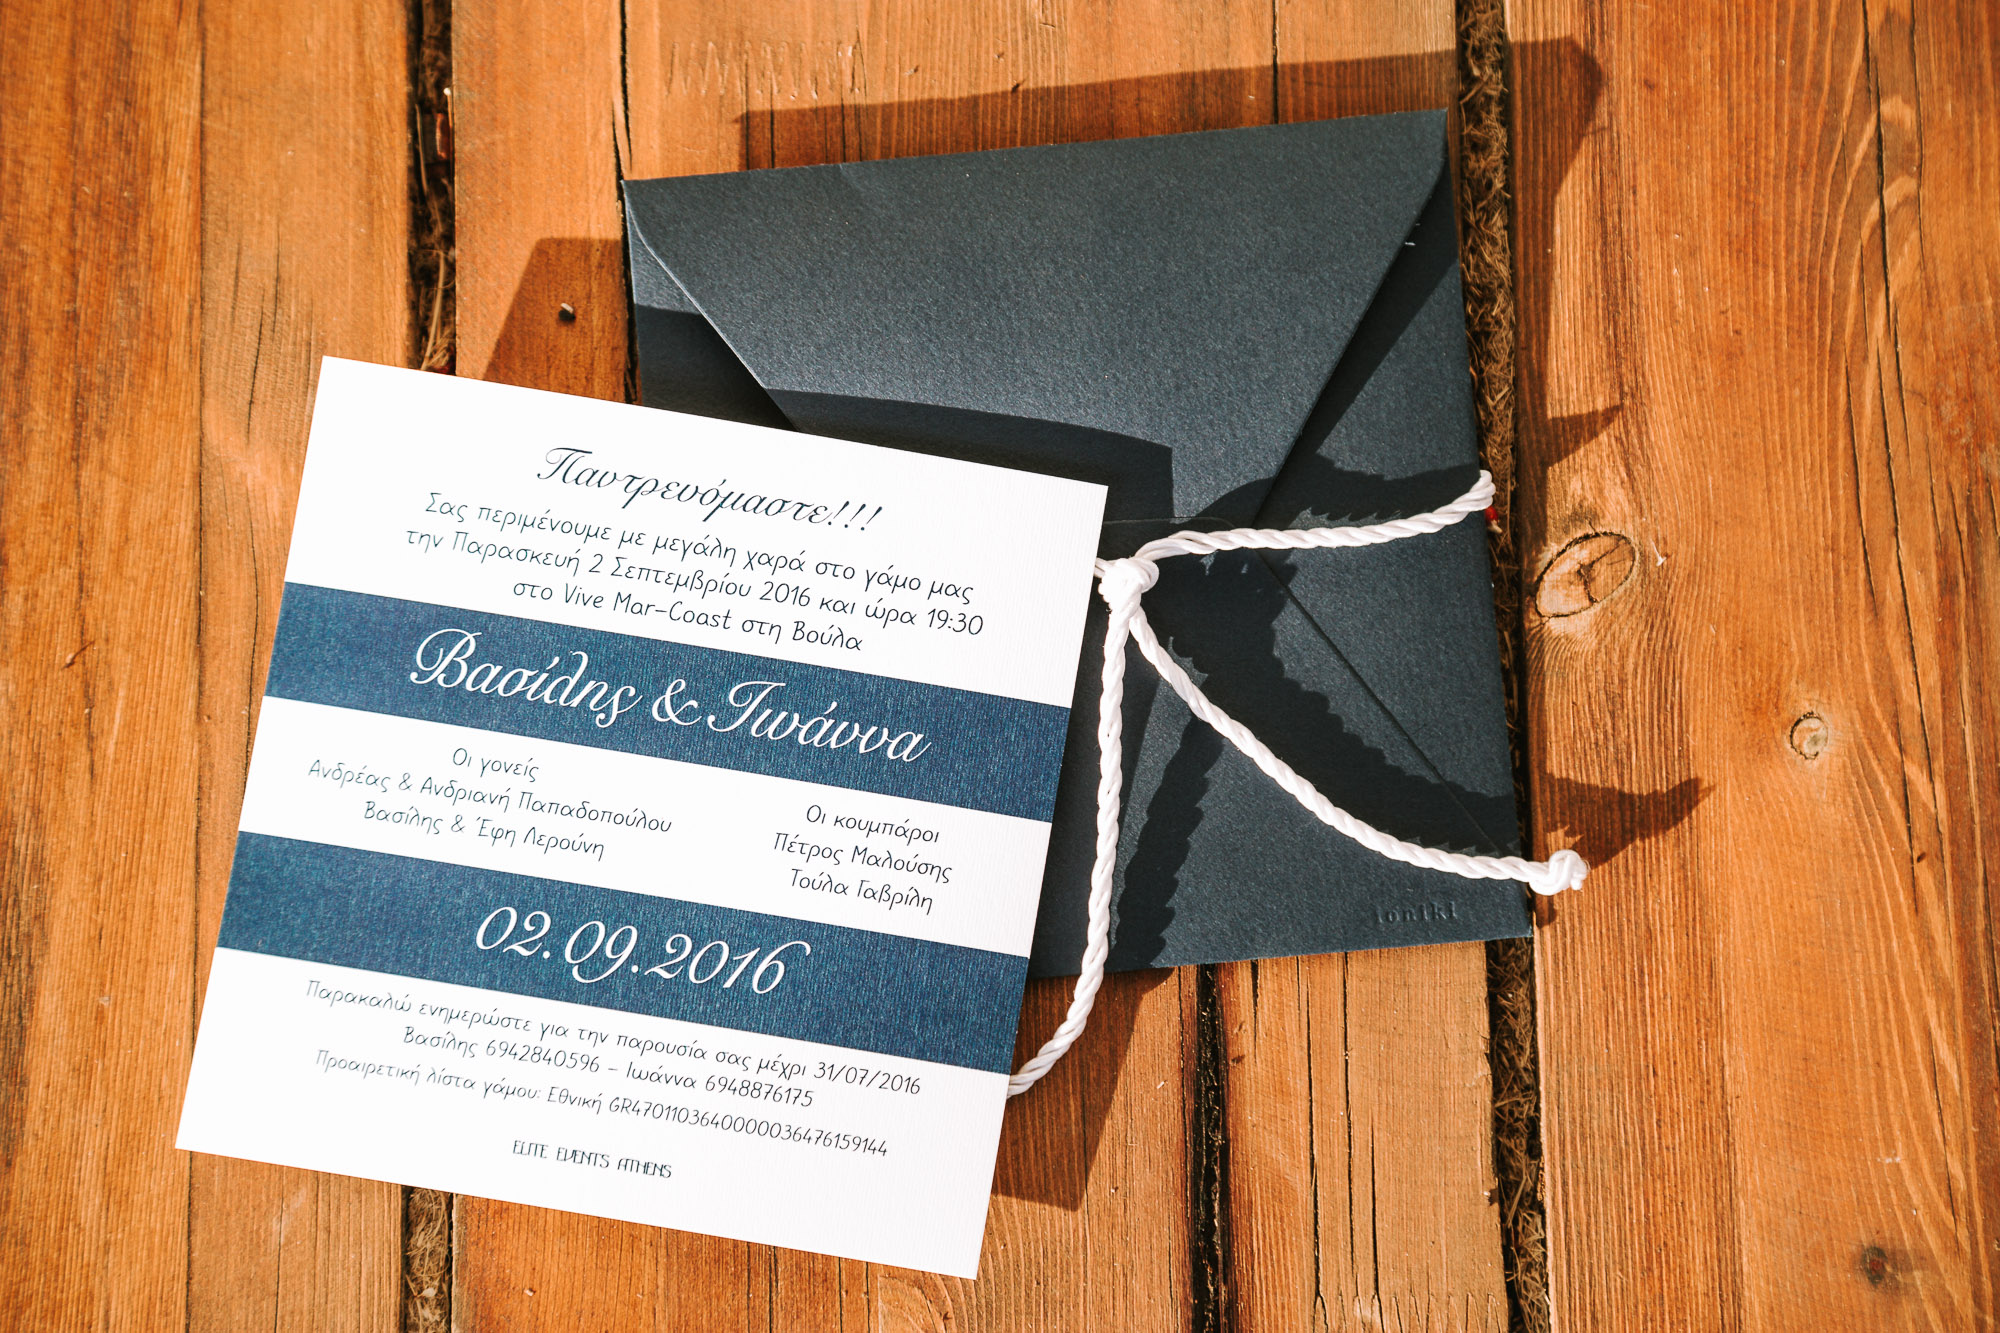 Nautical themed wedding invitation